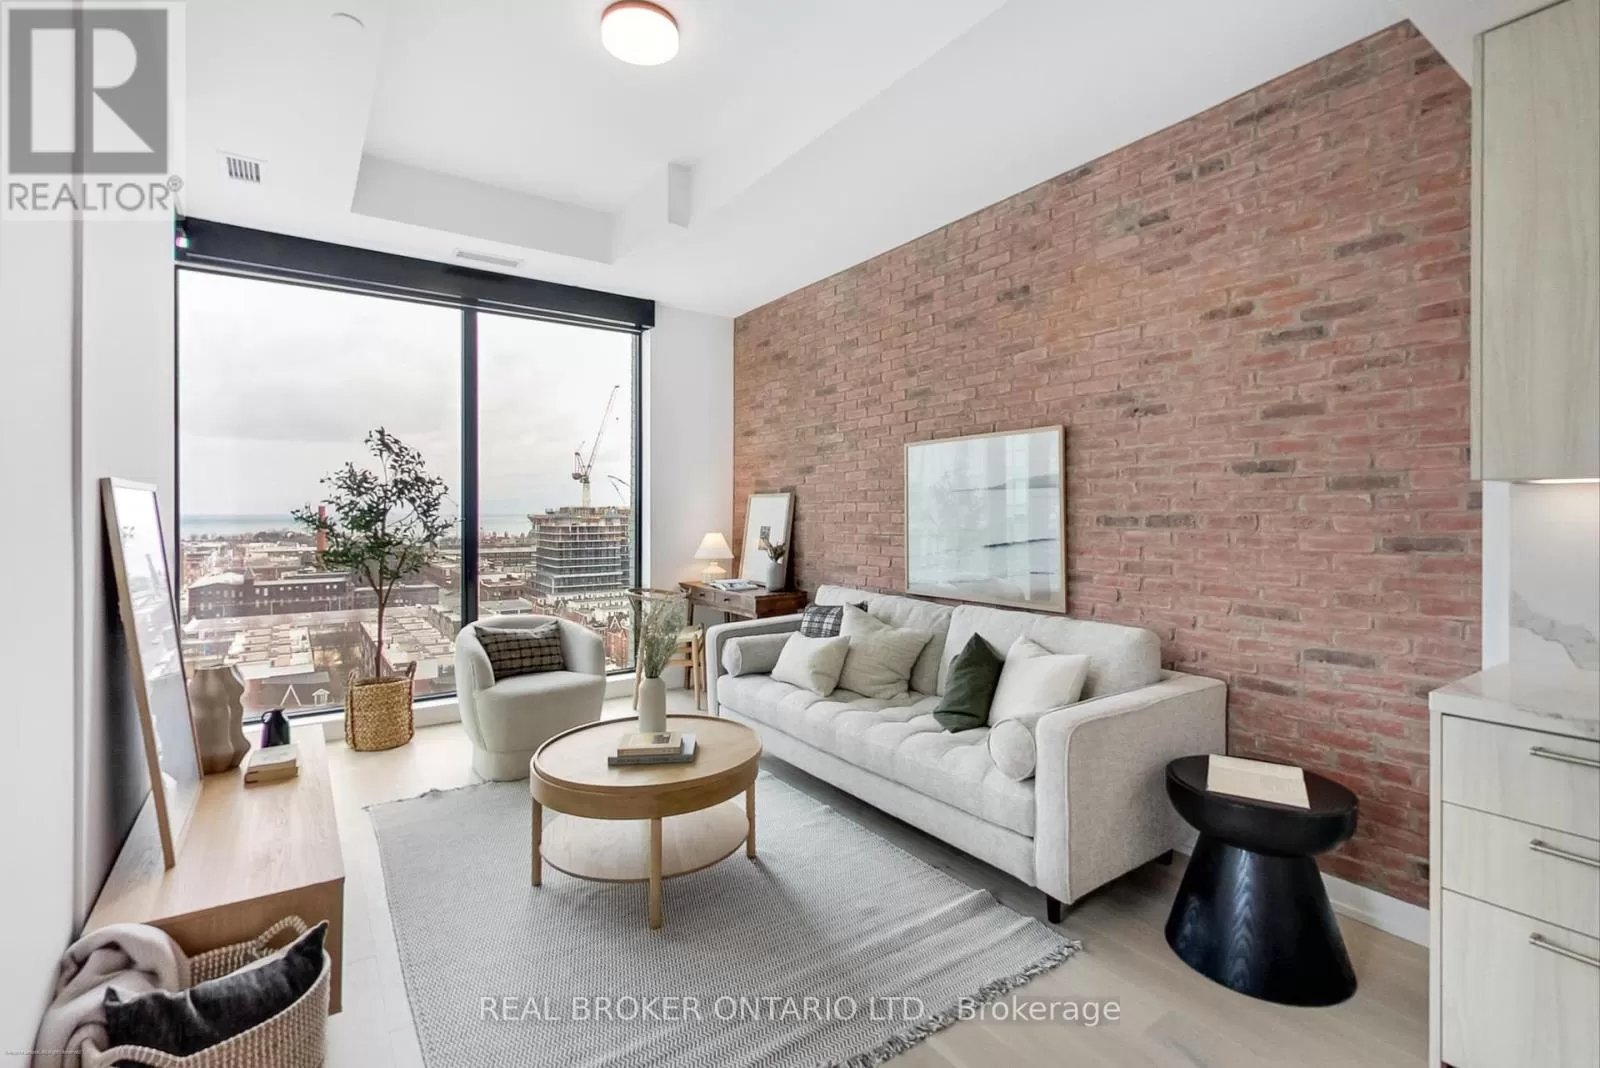 Apartment for rent: 1401 - 200 Sudbury Street, Toronto, Ontario M6J 1J4